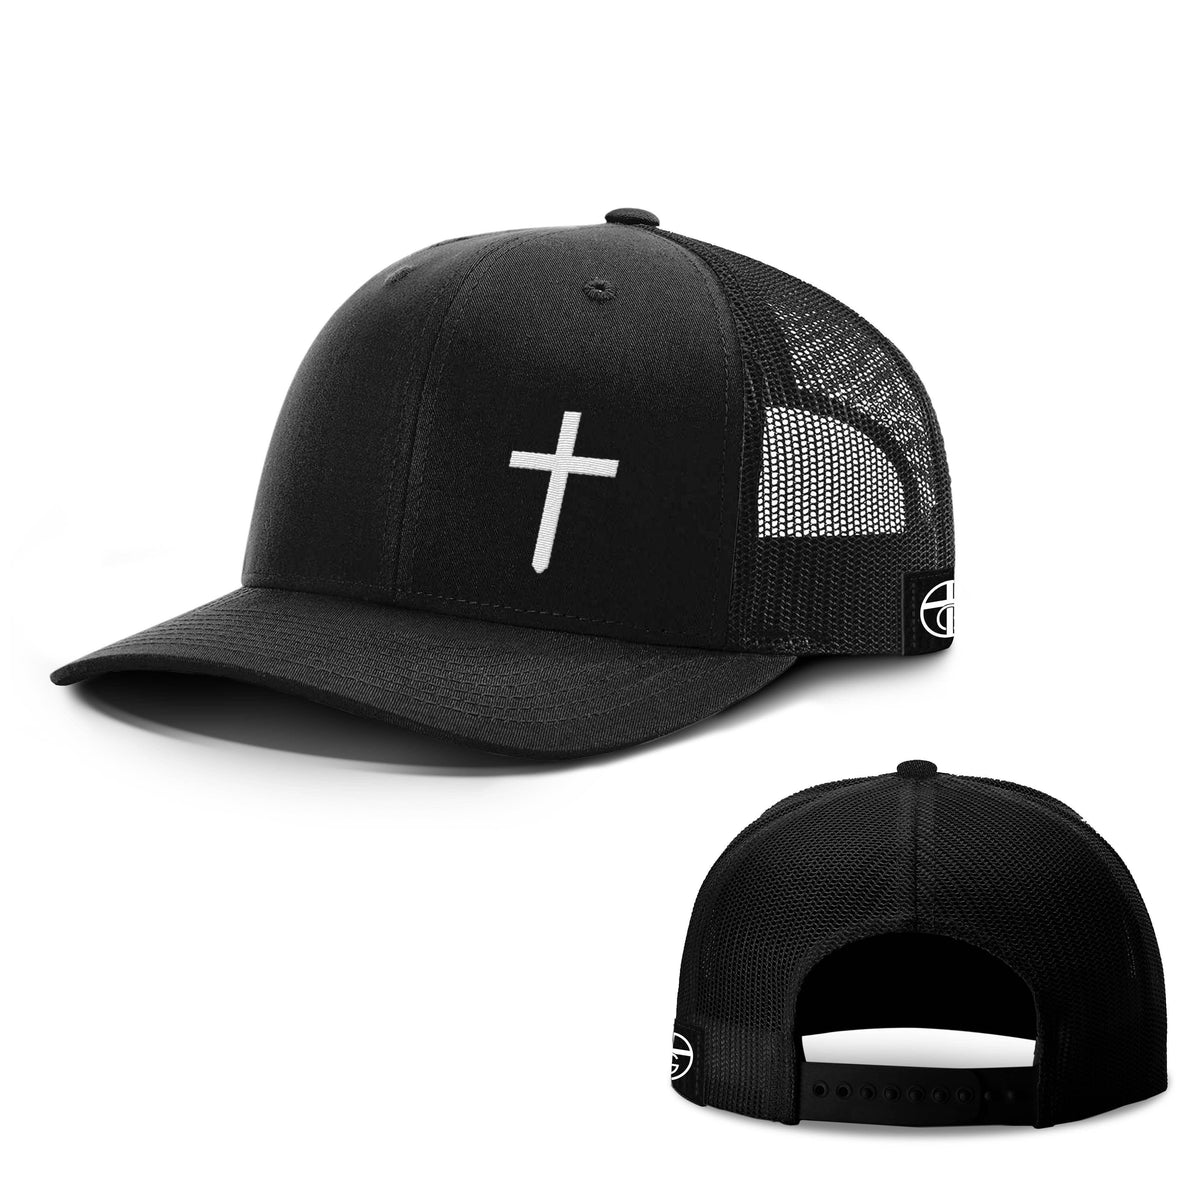 Cross Lower Left Hats - Our True God